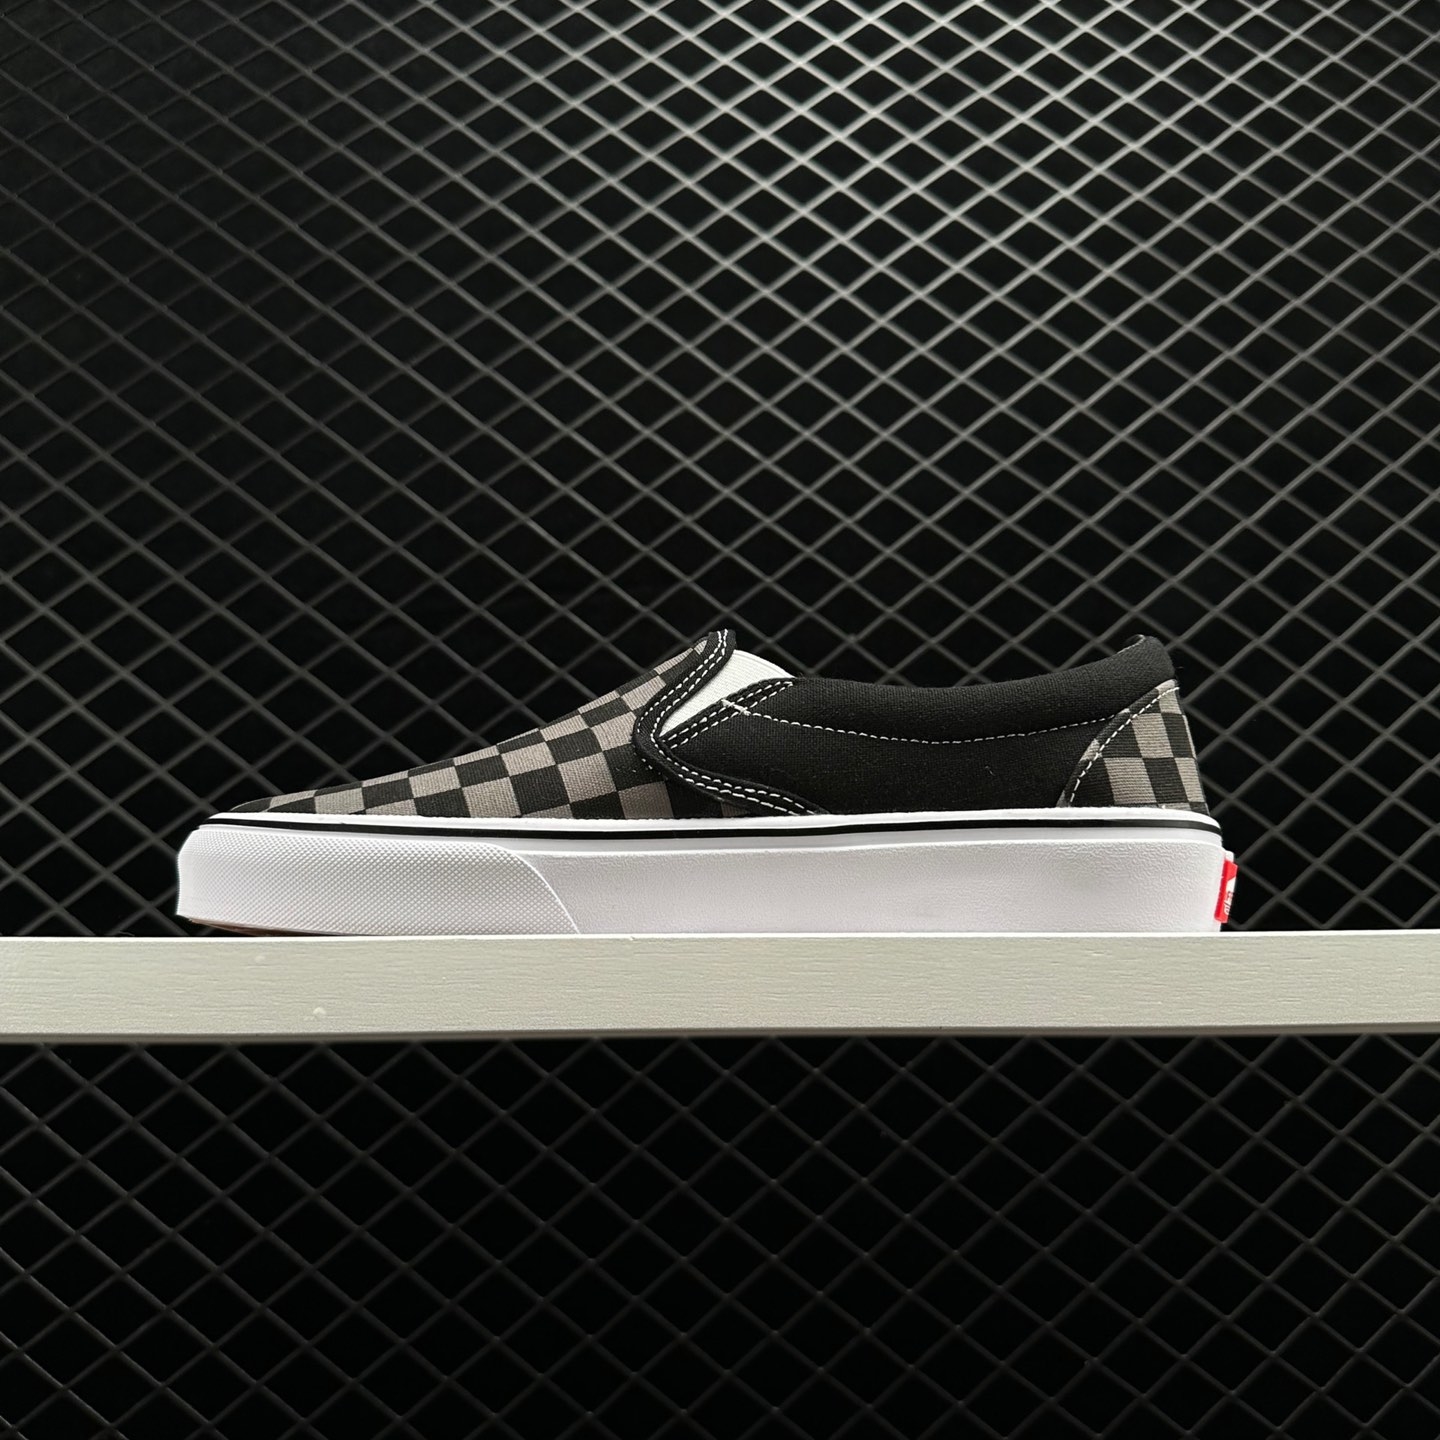 Vans Slip-On Black Pewter Checkerboard VN000EYEBPJ - Stylish and Classic Slip-On Shoes